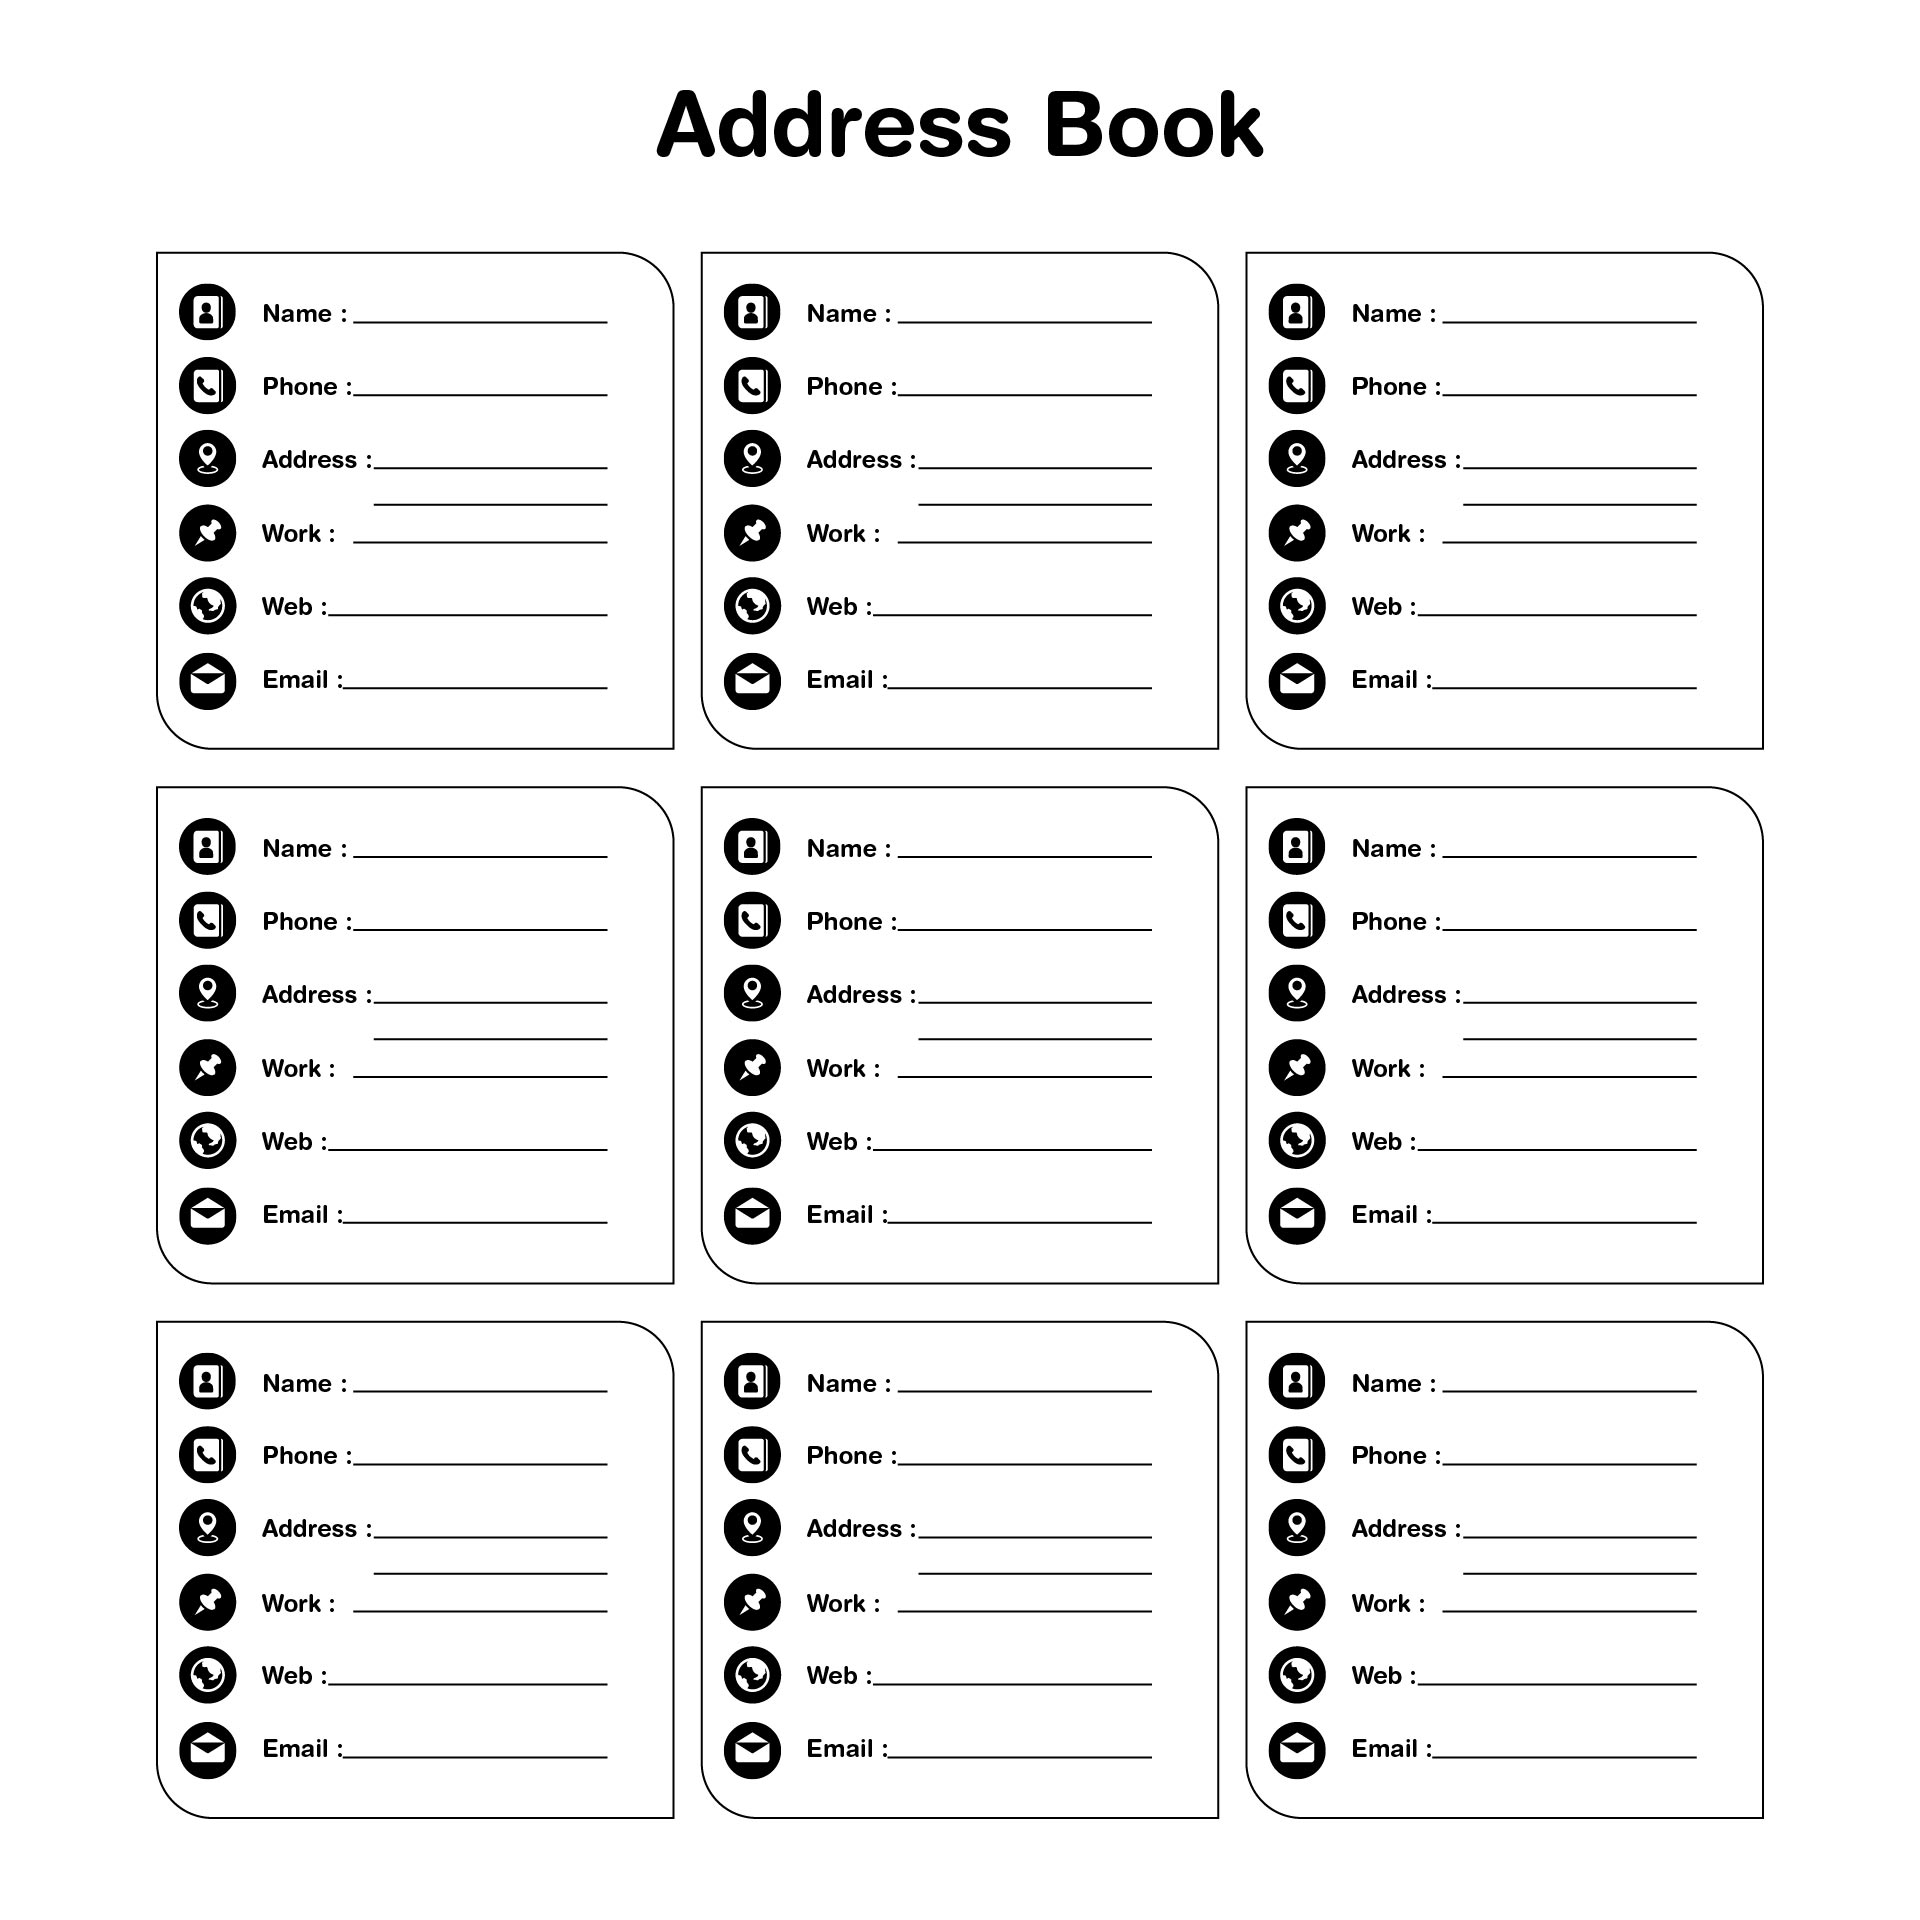 Alphabetical Address Book Template from www.printablee.com